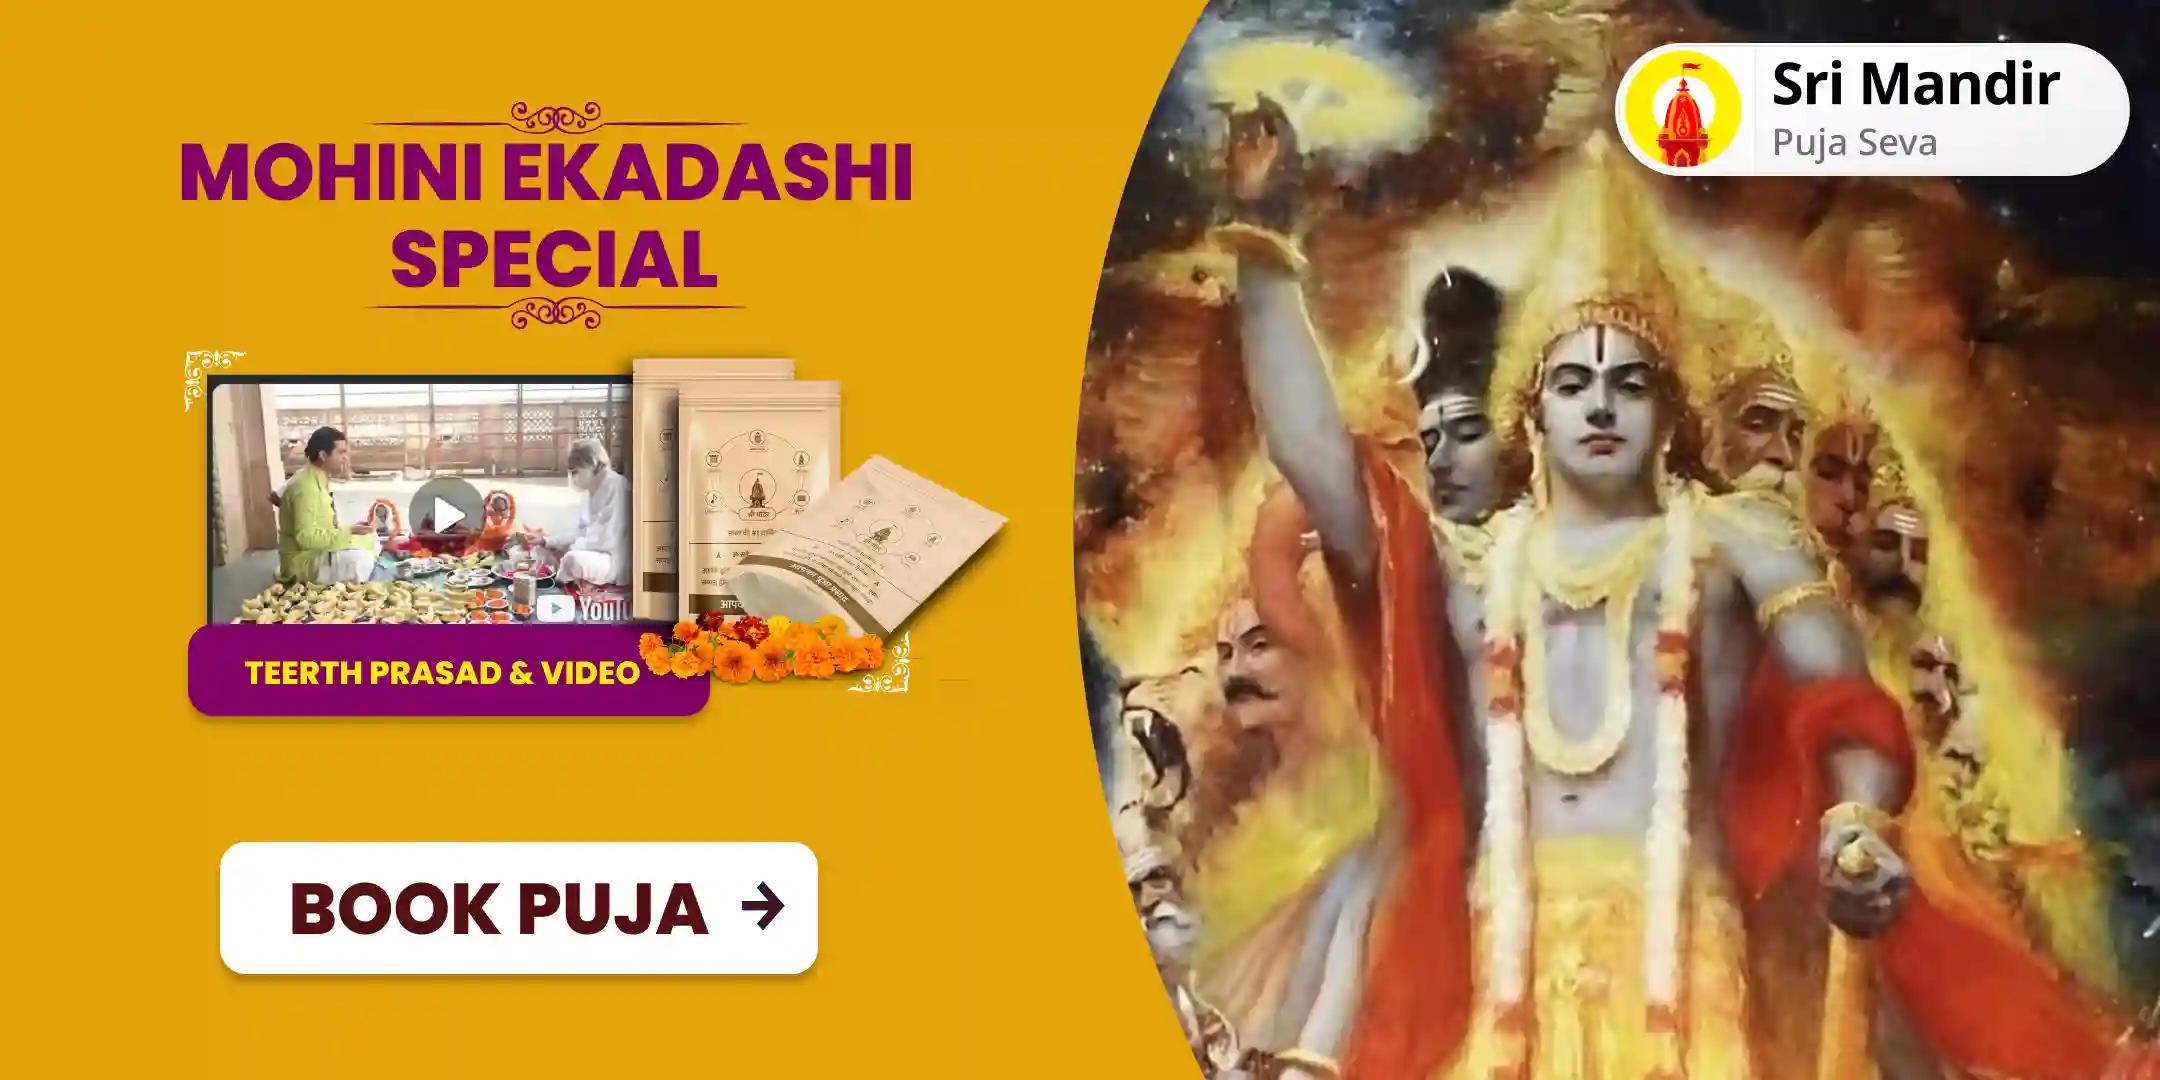 Mohini Ekadashi Special Ekadashi Vrat Katha, Vishnu Sahasranama Path and Anna Daan for Prosperity and Spiritual Well-Being